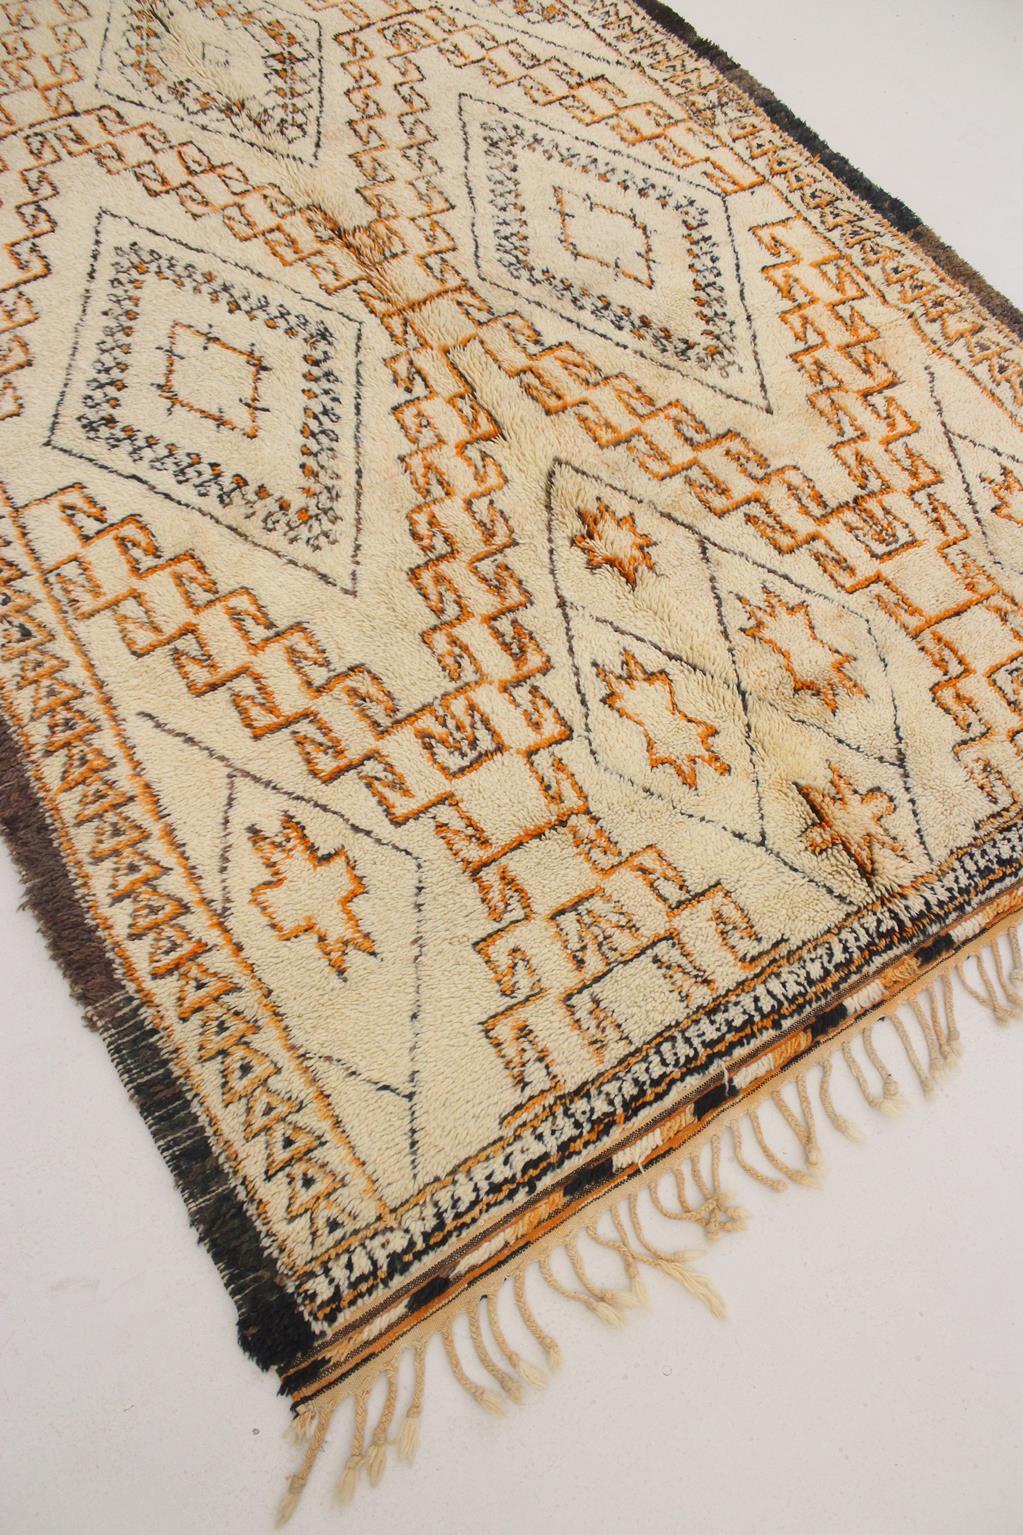 Vintage Moroccan Beni Ourain rug - Beige/orange - 6.2x11.1feet / 190x340cm For Sale 6